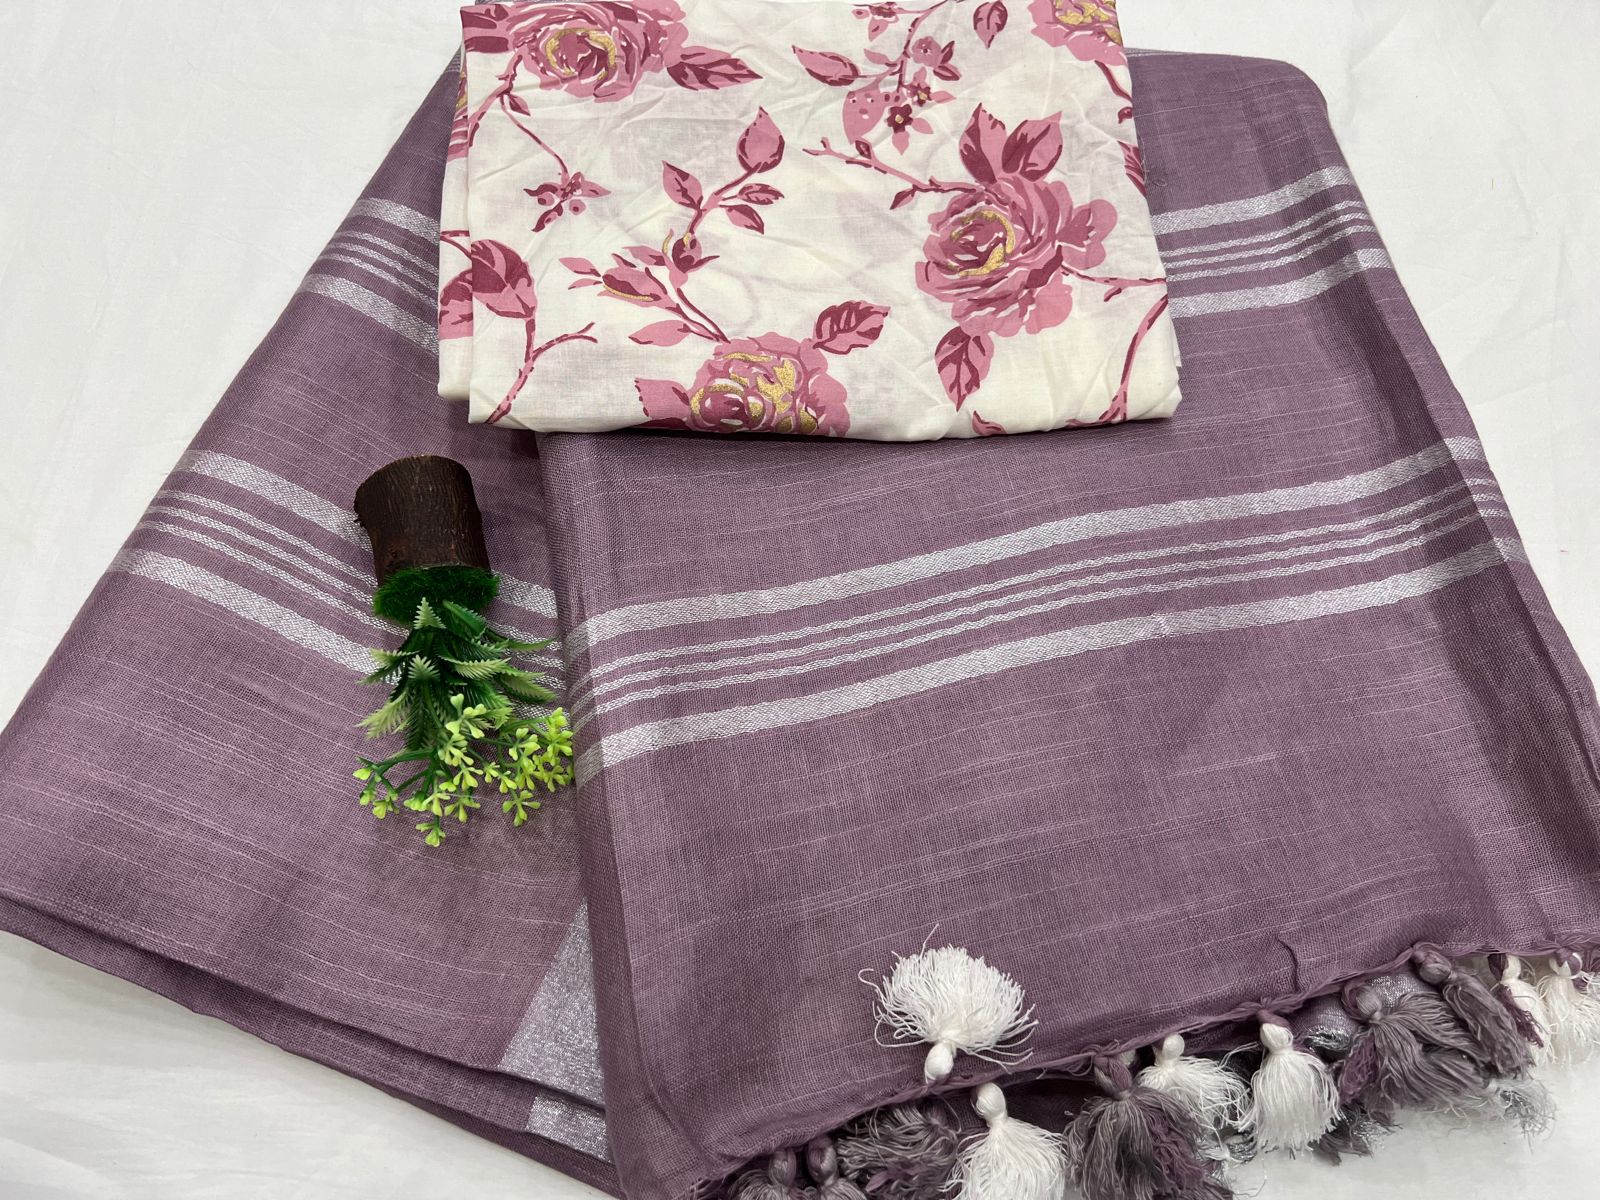 Mountbatten Pink linen plain sarees latest with printed cotton blouse